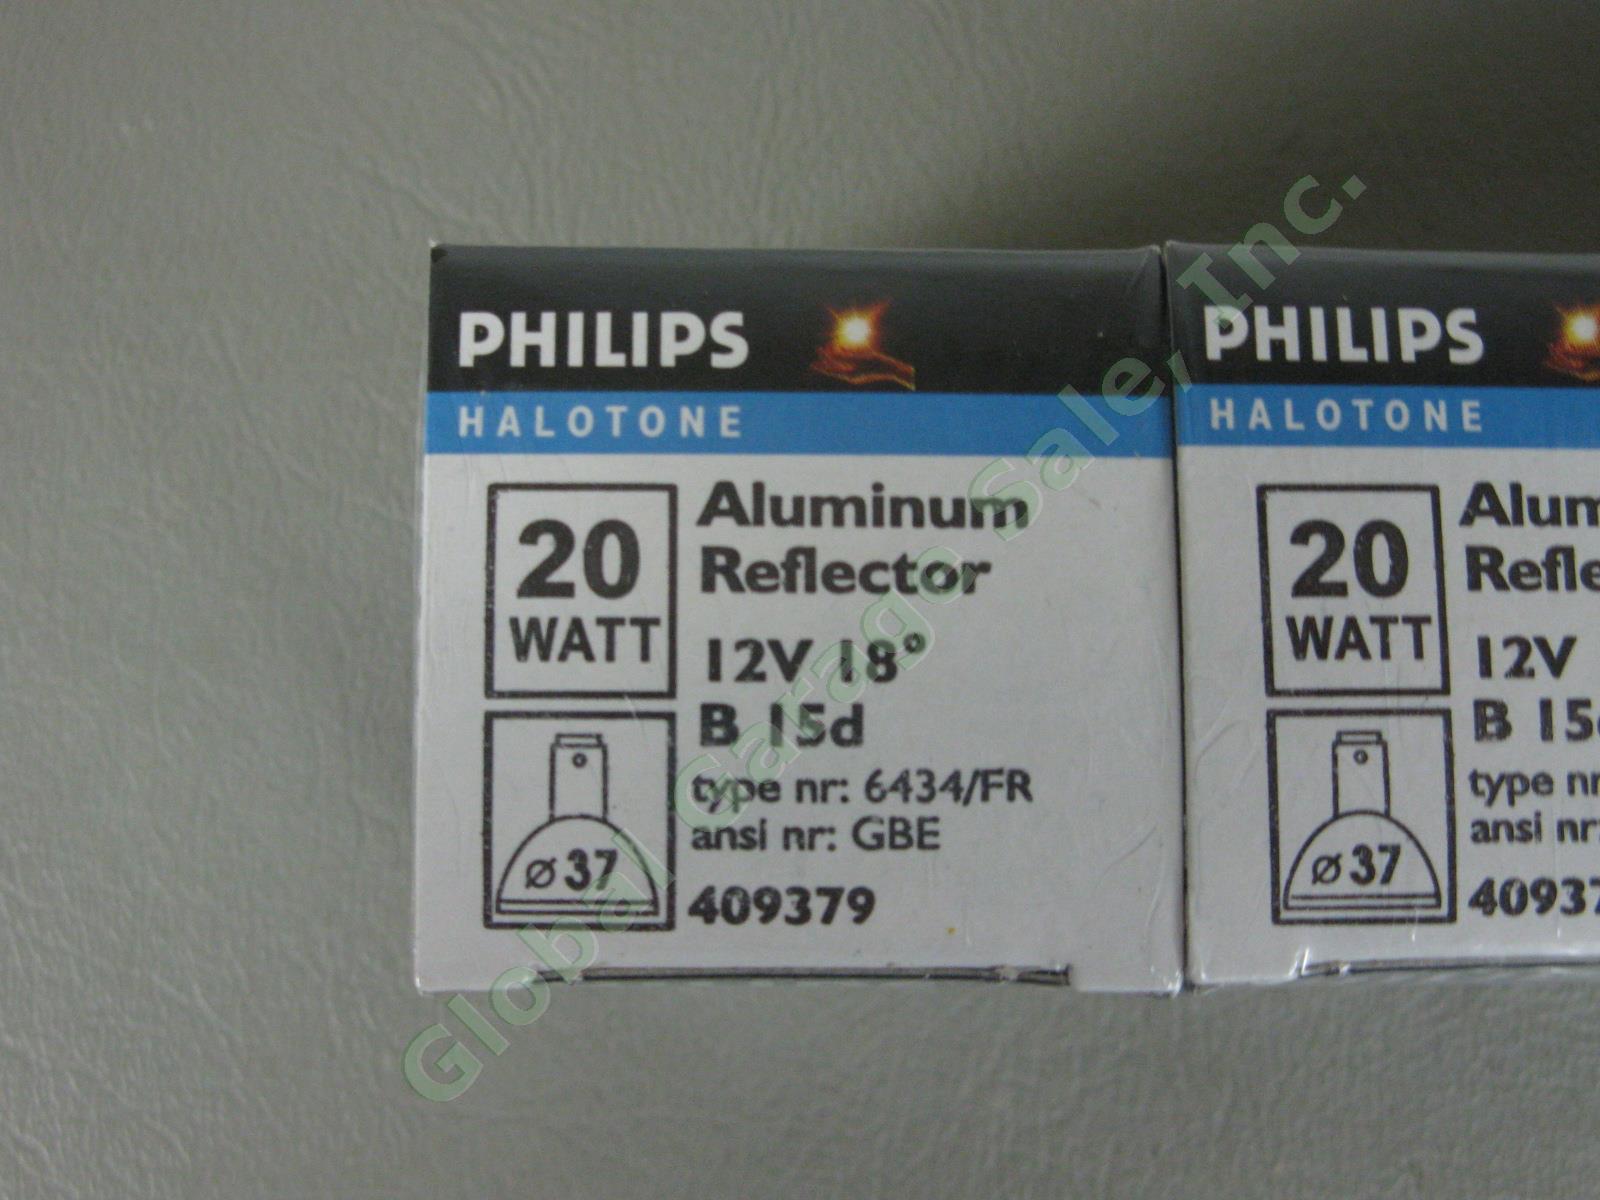 50 NEW Philips Halotone Light Bulb Lot 20w 12v UV Block 6434/FR Frosted 18° Set 4